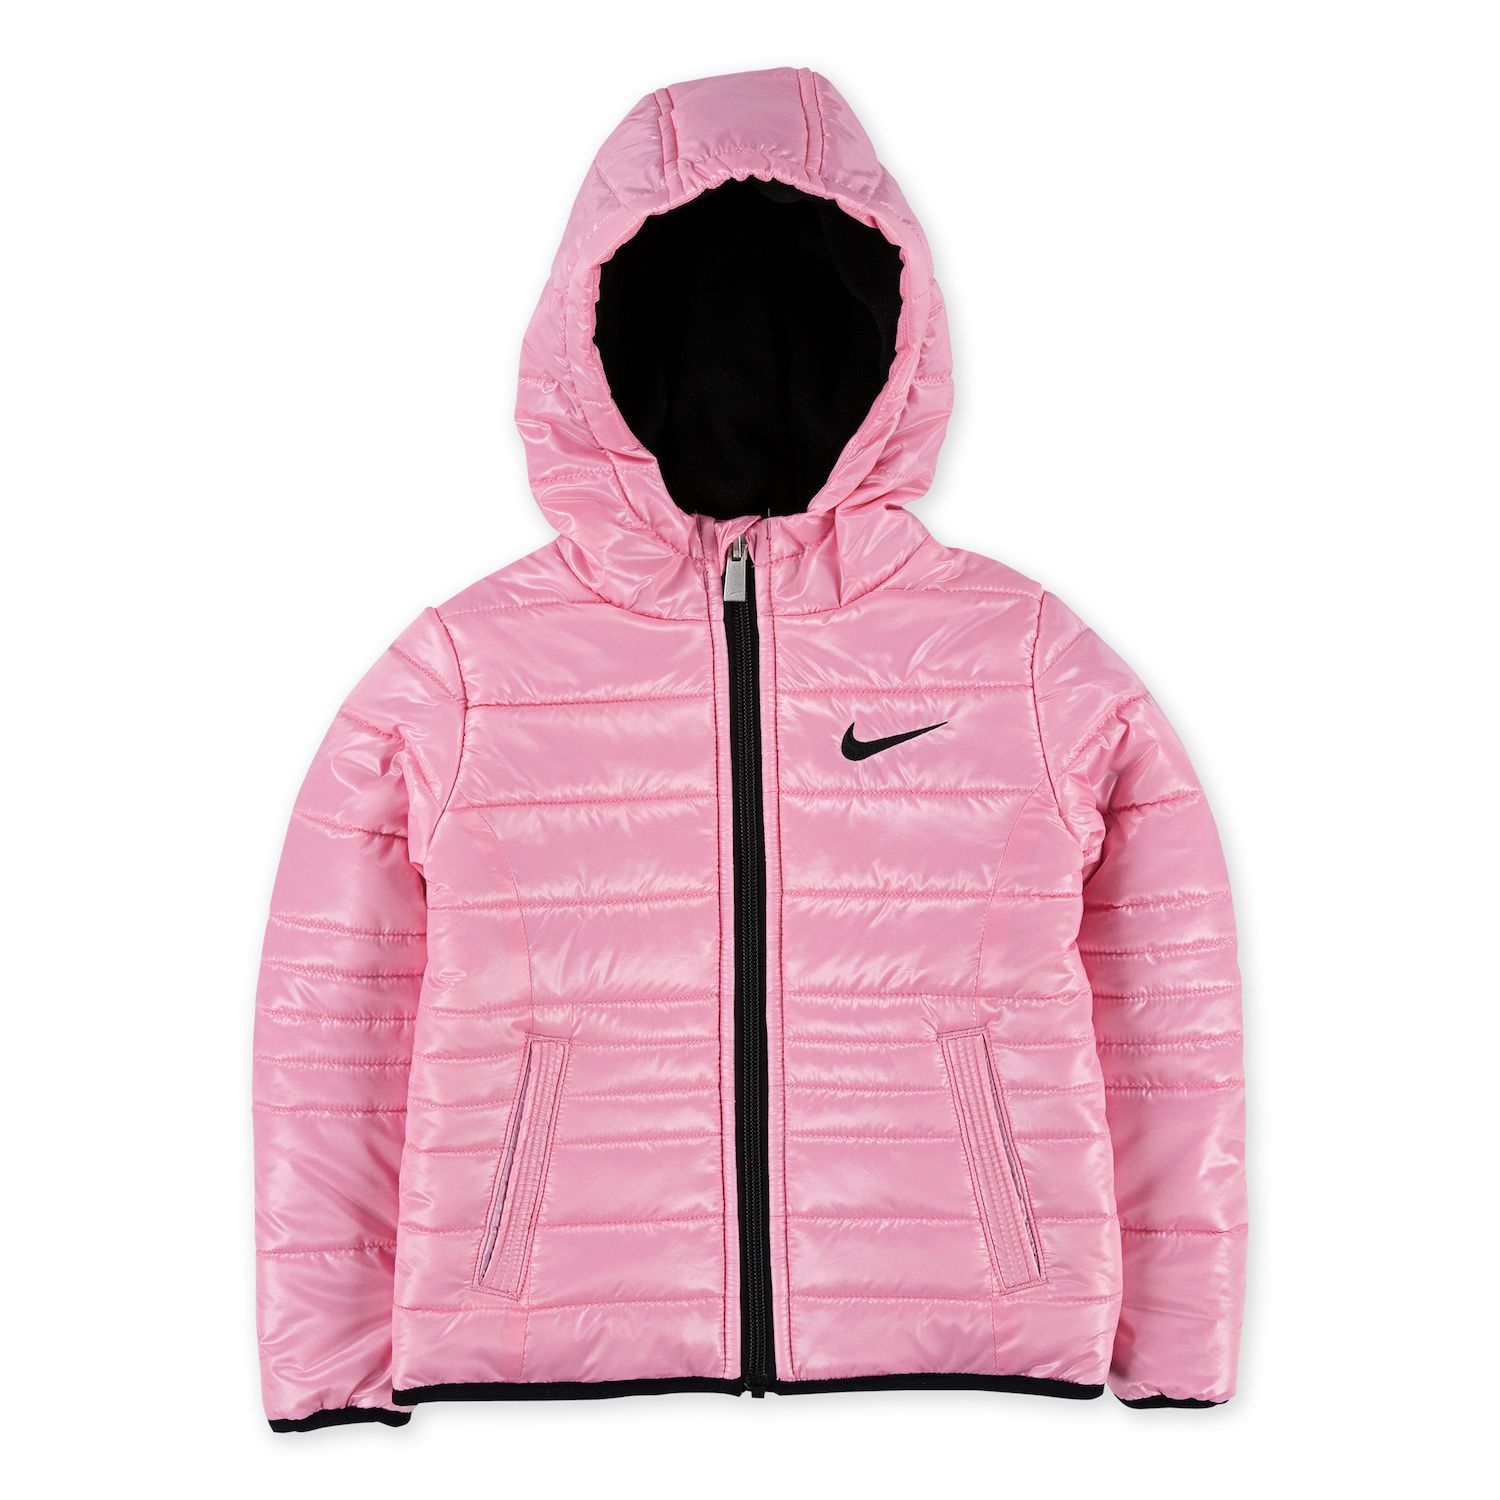 nike puffer jacket women's pink